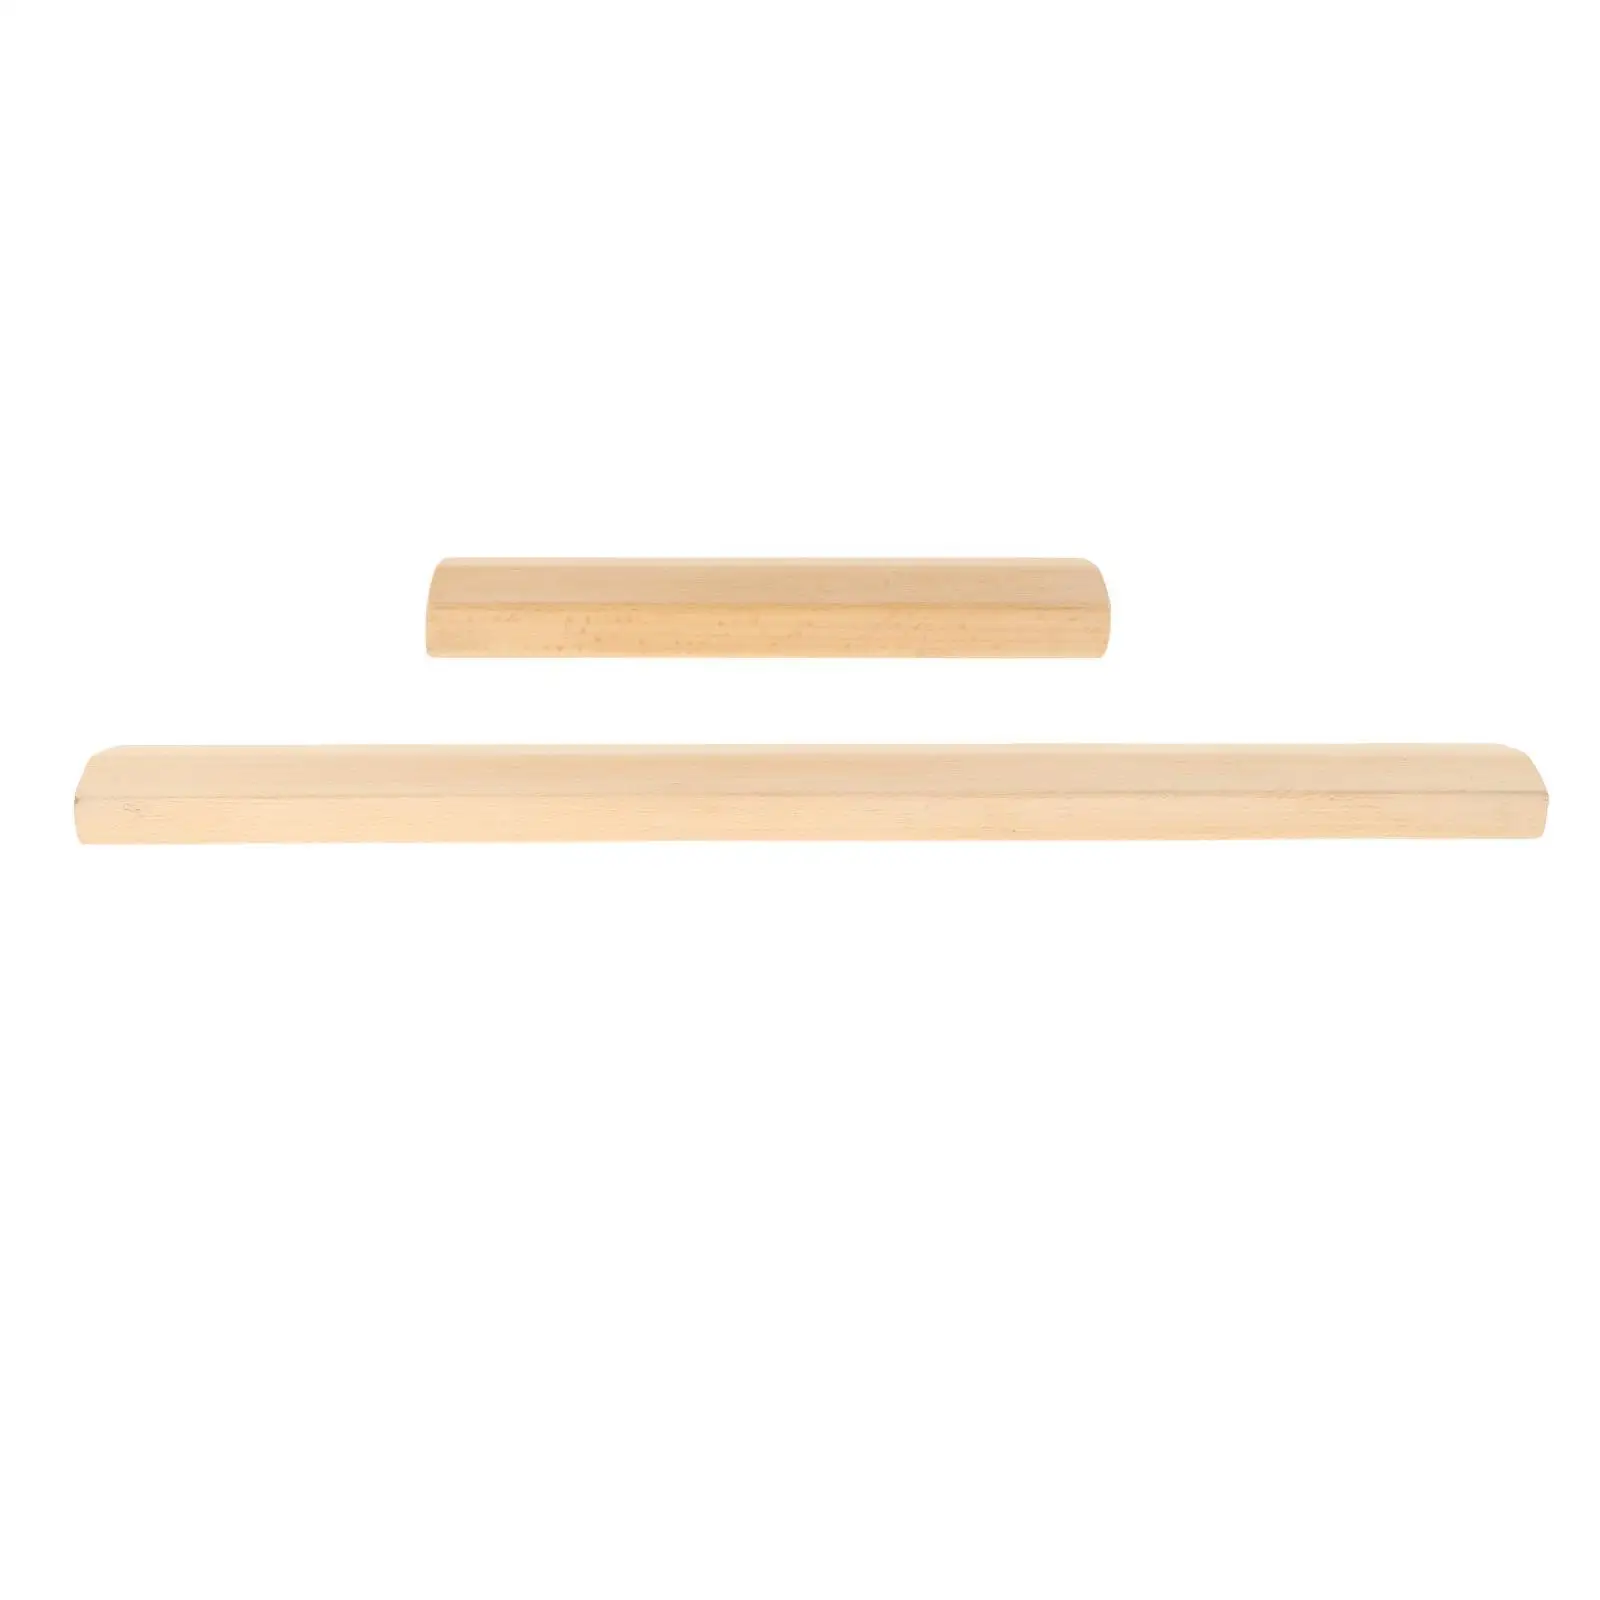 1Pcs Yoga Brick Wooden Anti-Slip Accs Support Equipment Sturdy Slant Wedge